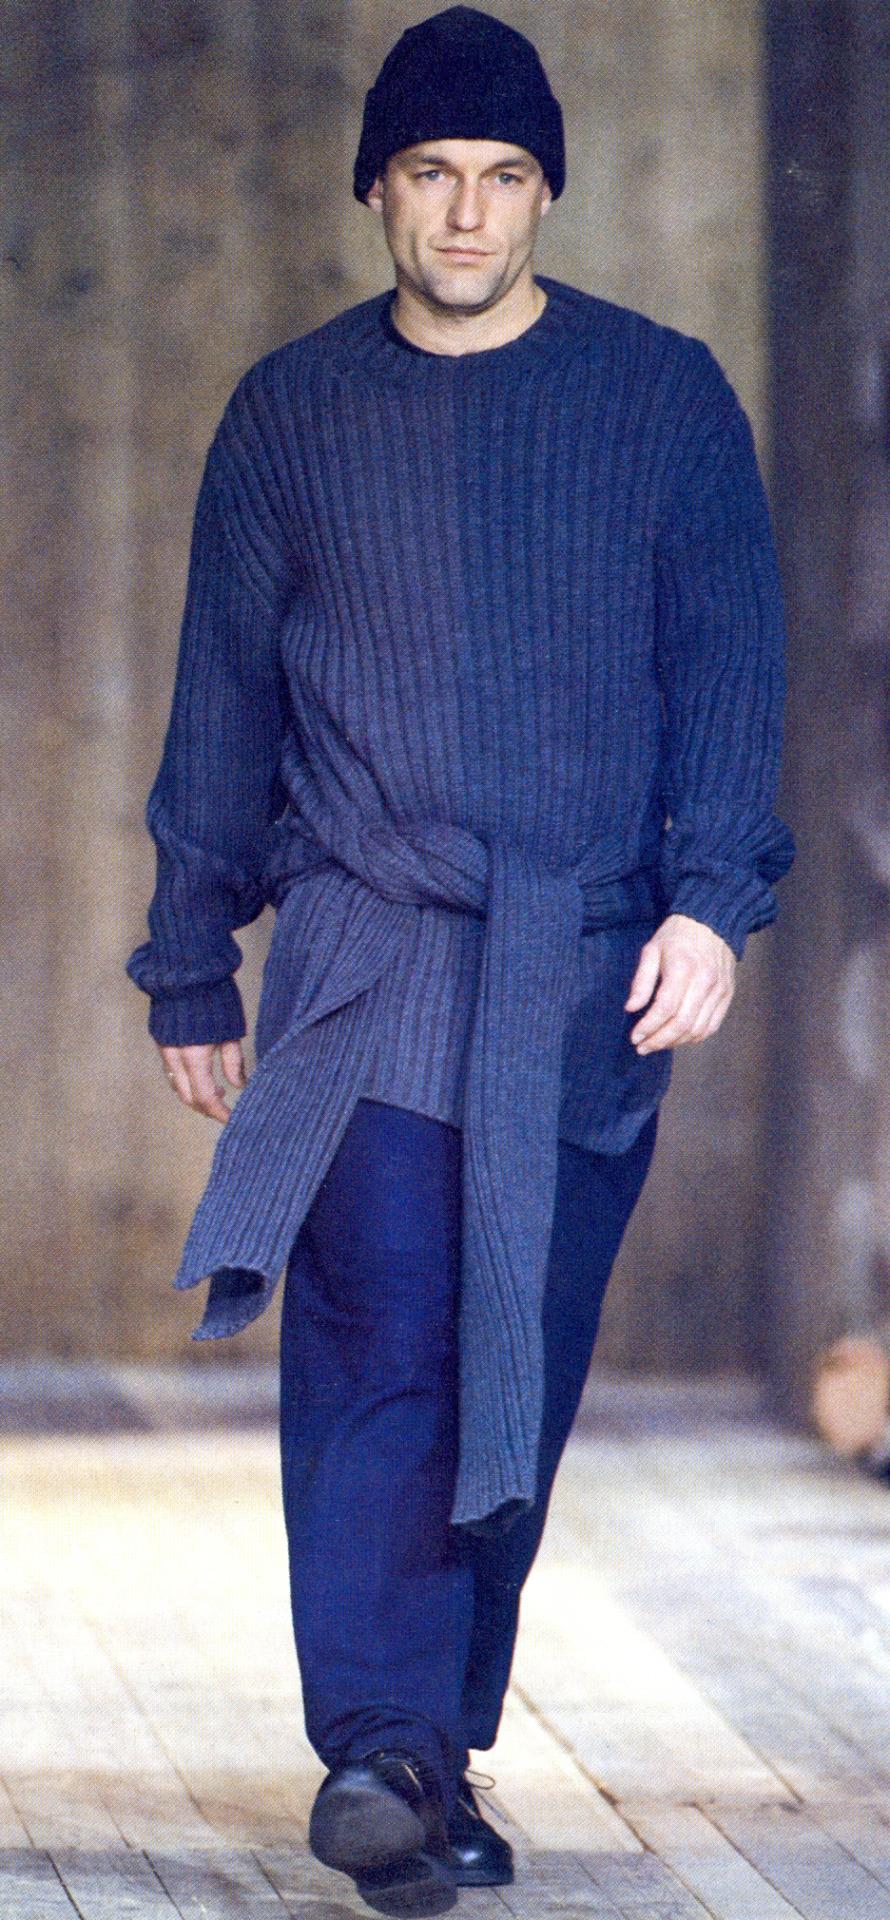 ▪ Yohji Yamamoto grey knitted turtleneck sweater
▪ 100% Wool
▪ Four sleeves (two tying around the waist)
▪ Size Medium
▪ Fall-Winter 1992
